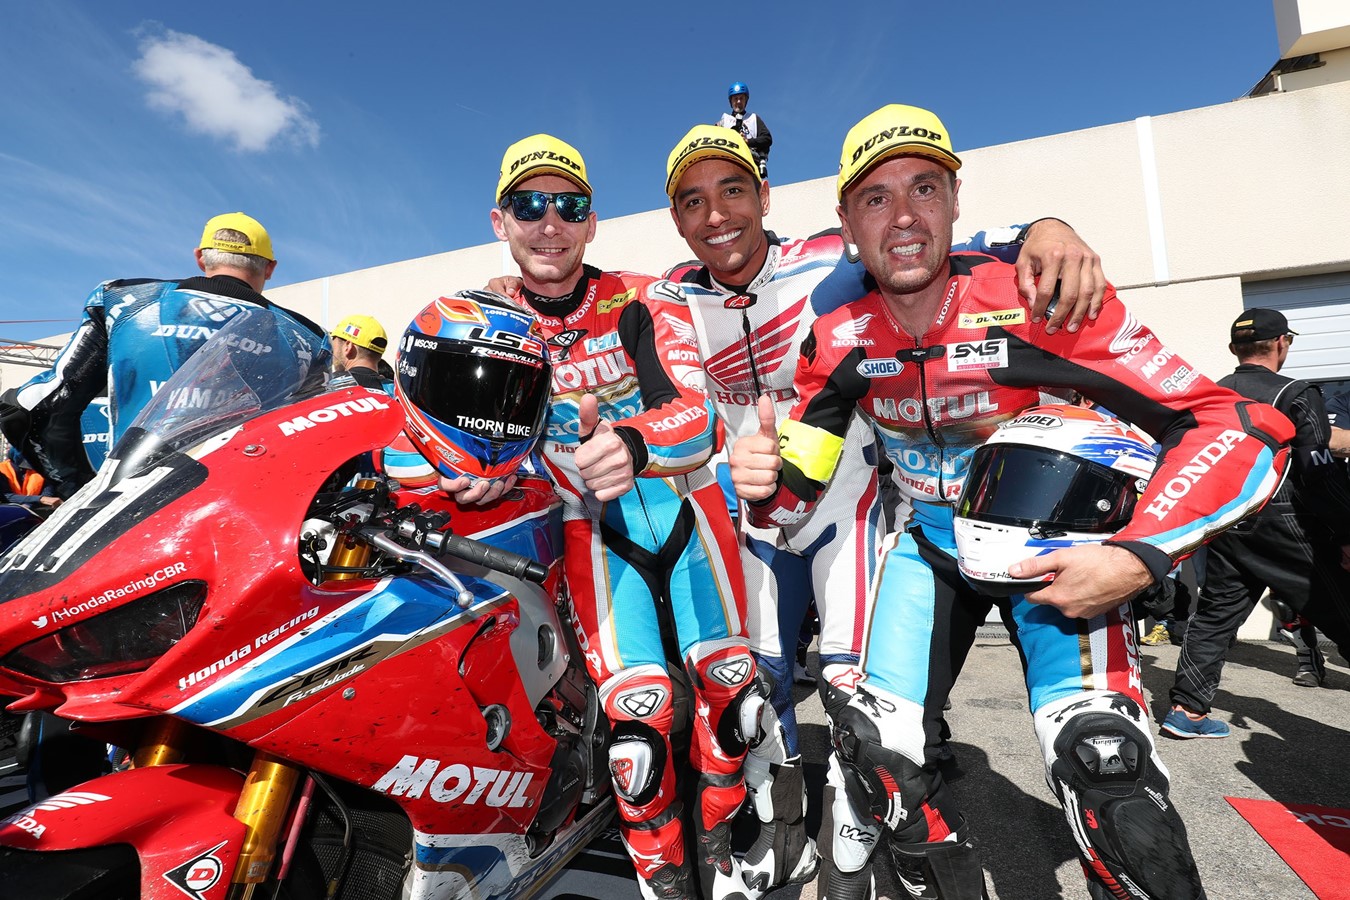 Spectacular podium finish for Honda Endurance Racing at the Bol d’Or